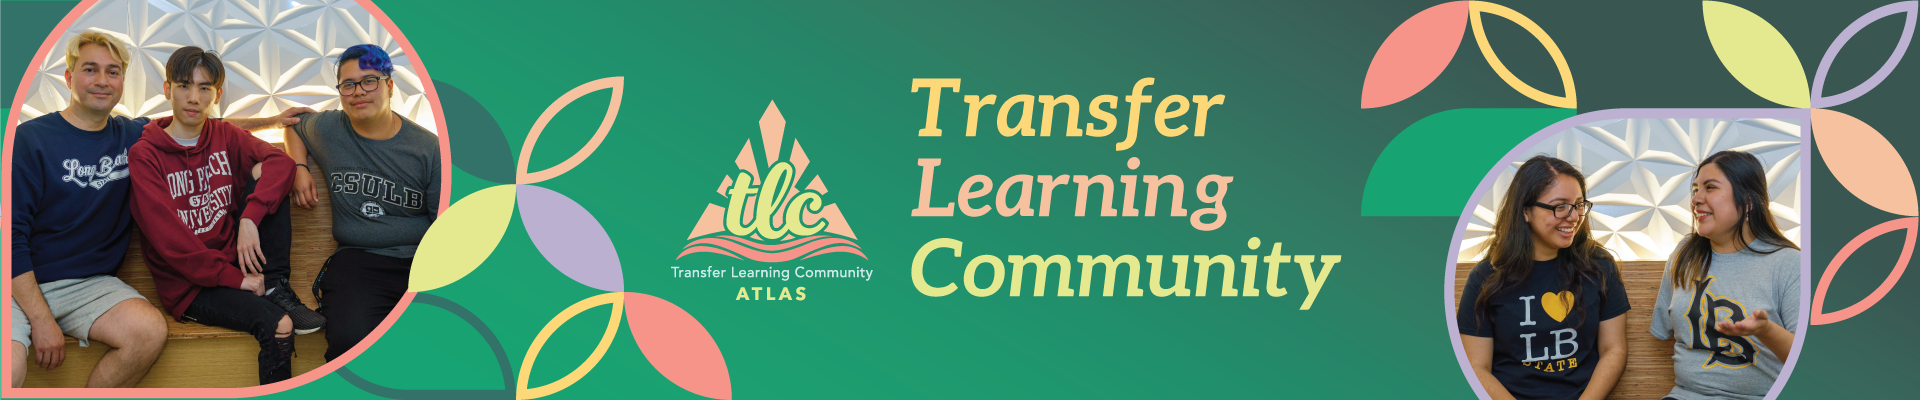 Transfer Learning Community